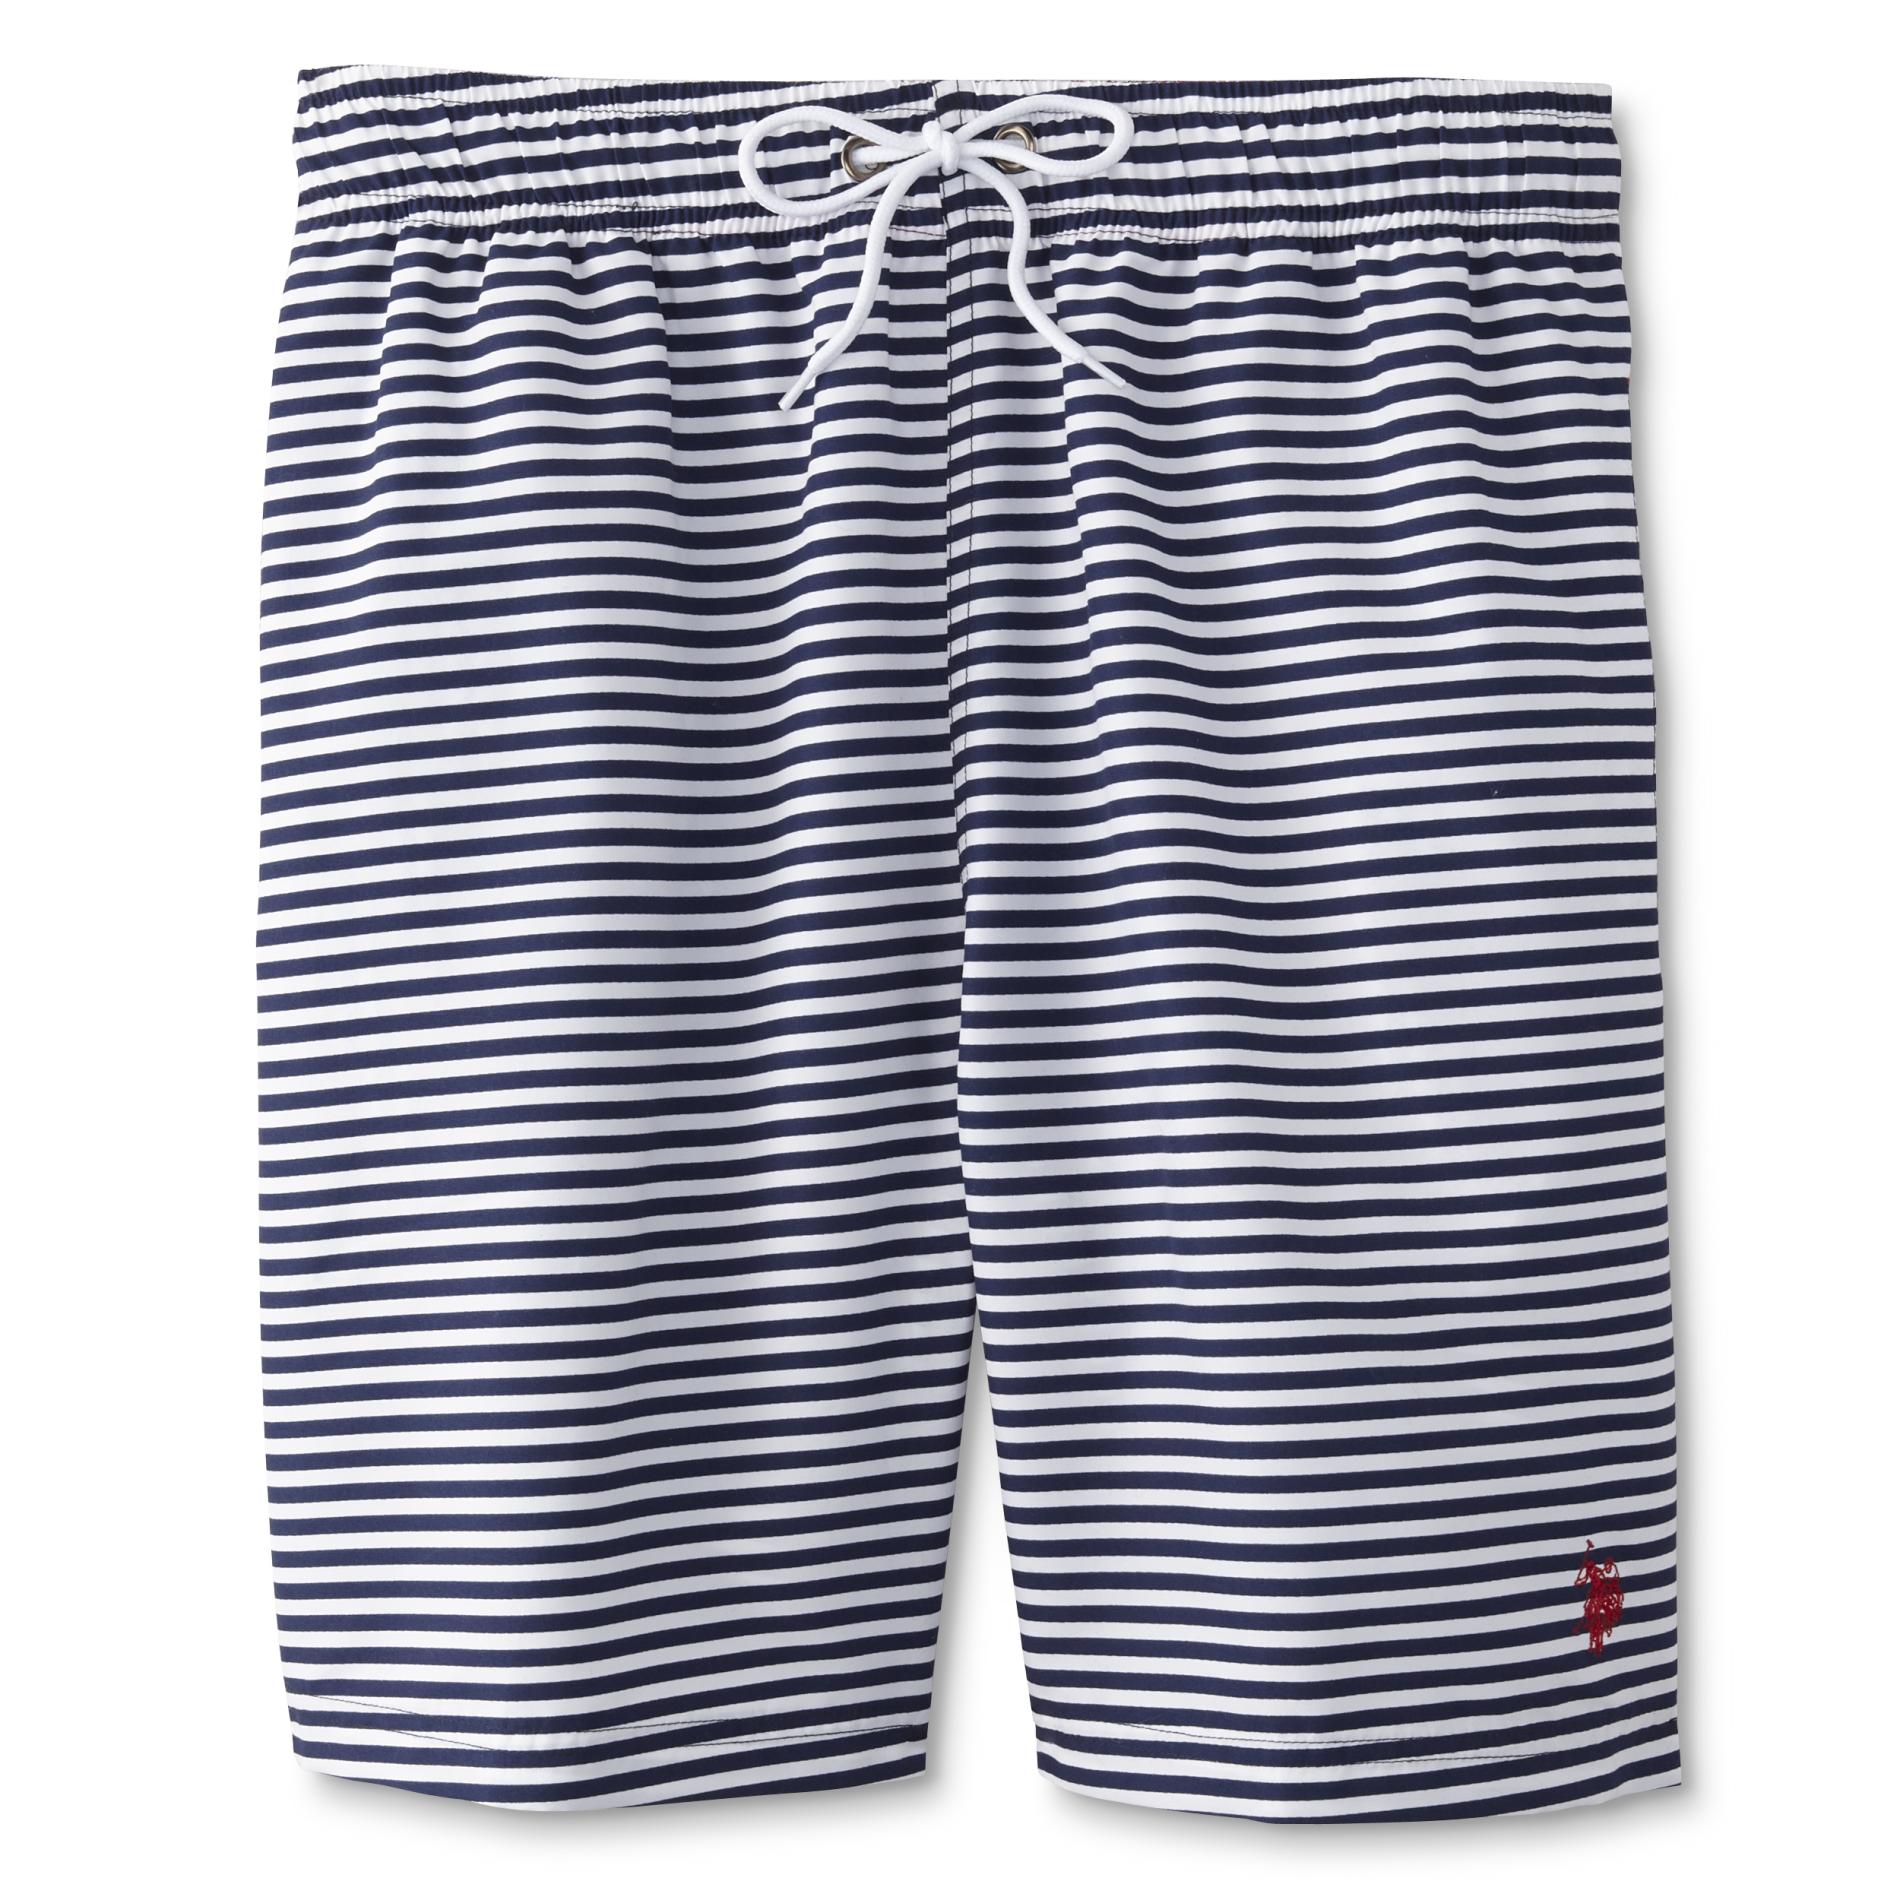 U.S. Polo Assn. Men's Swim Trunks - Striped